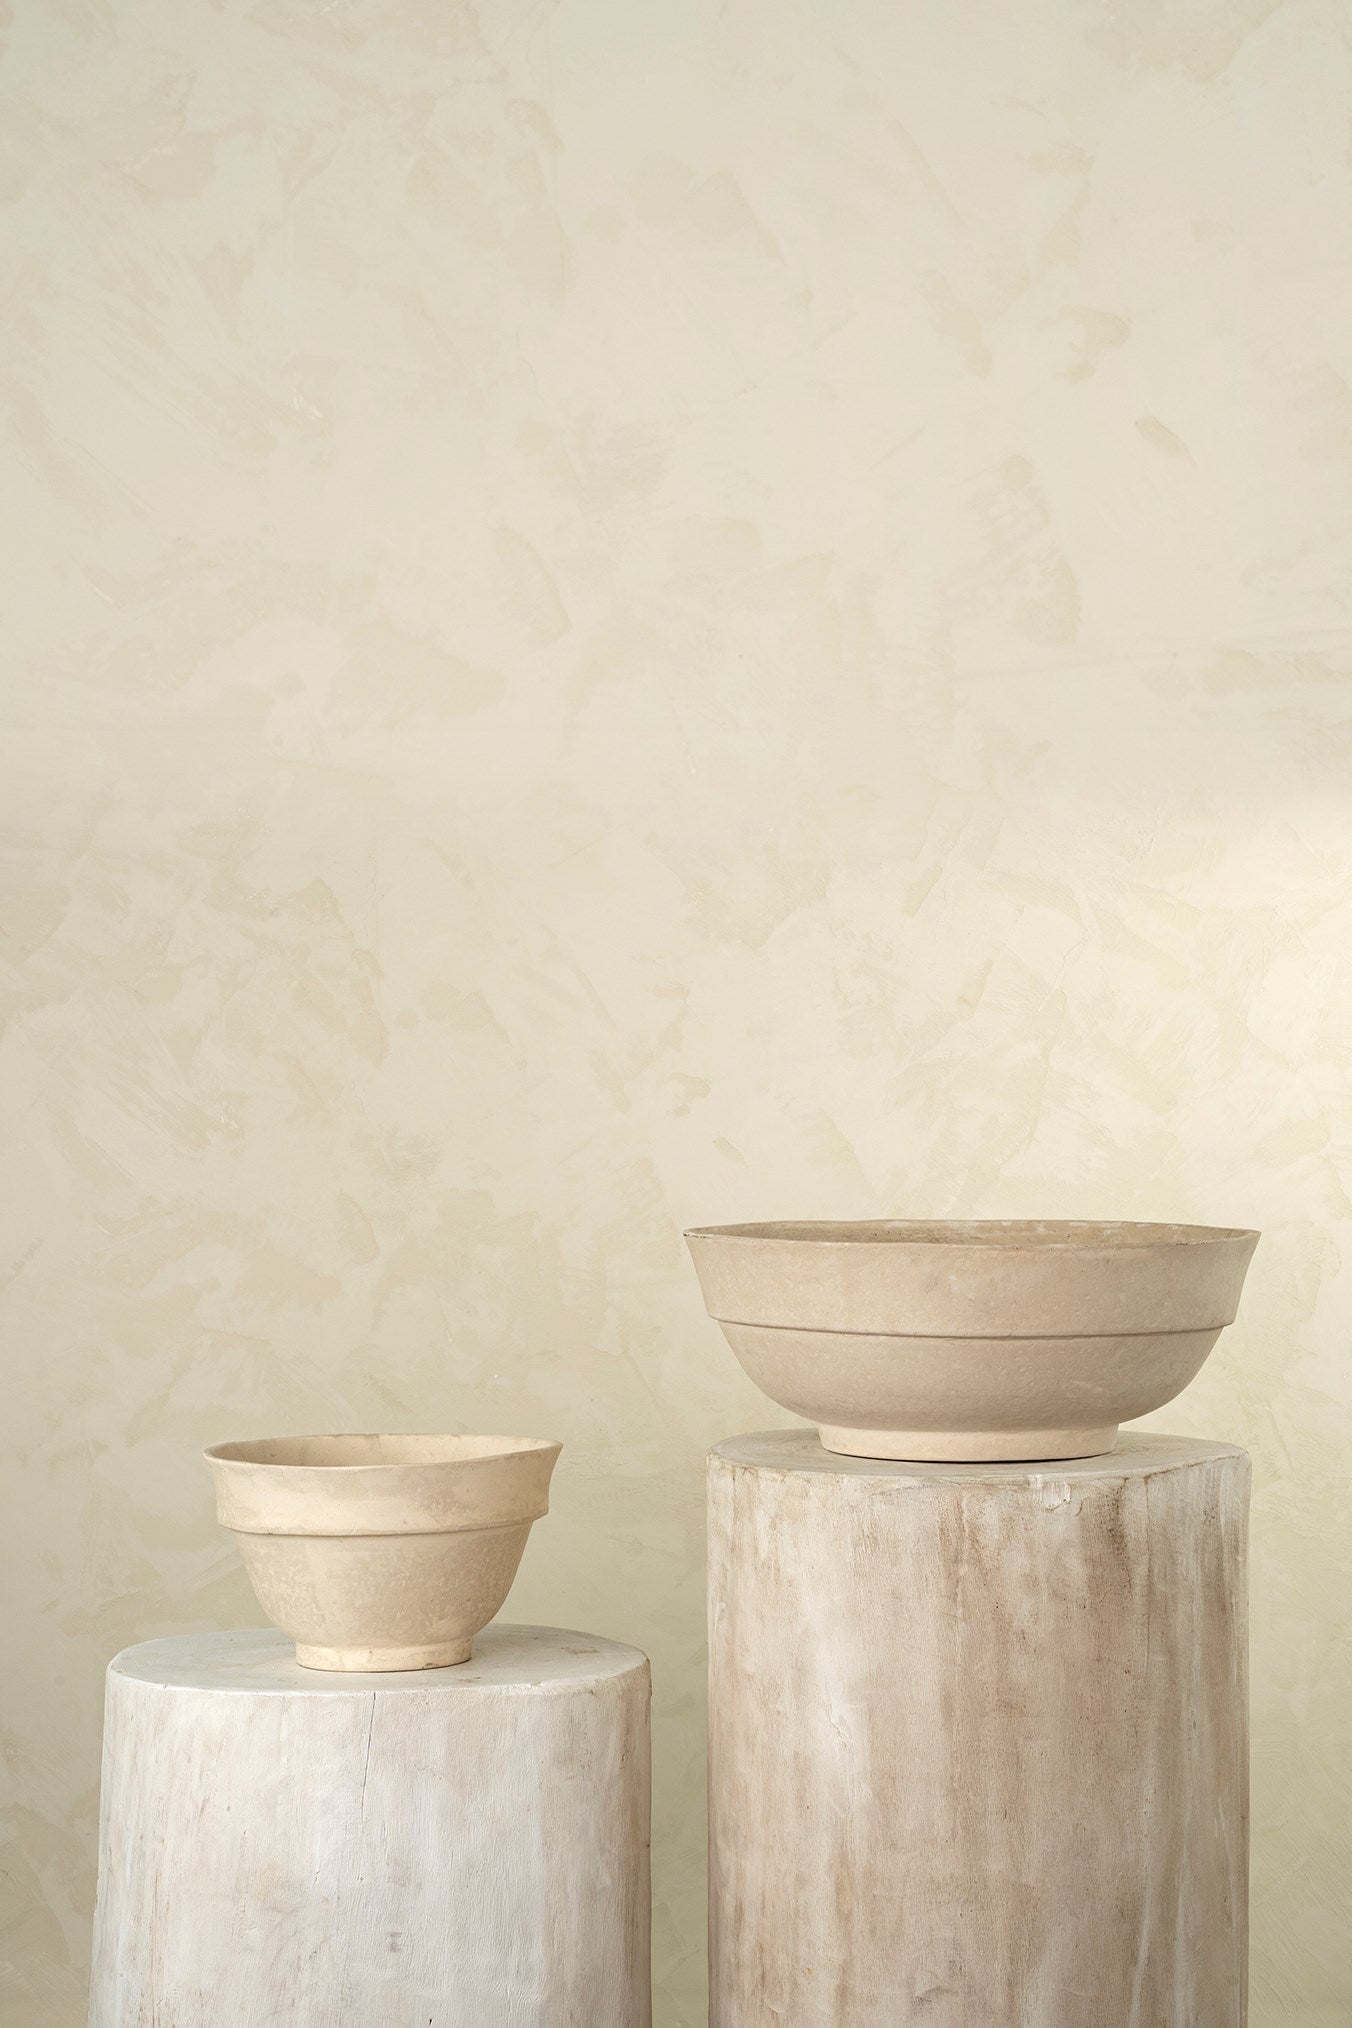 Sienna paper Mache Bowl - large